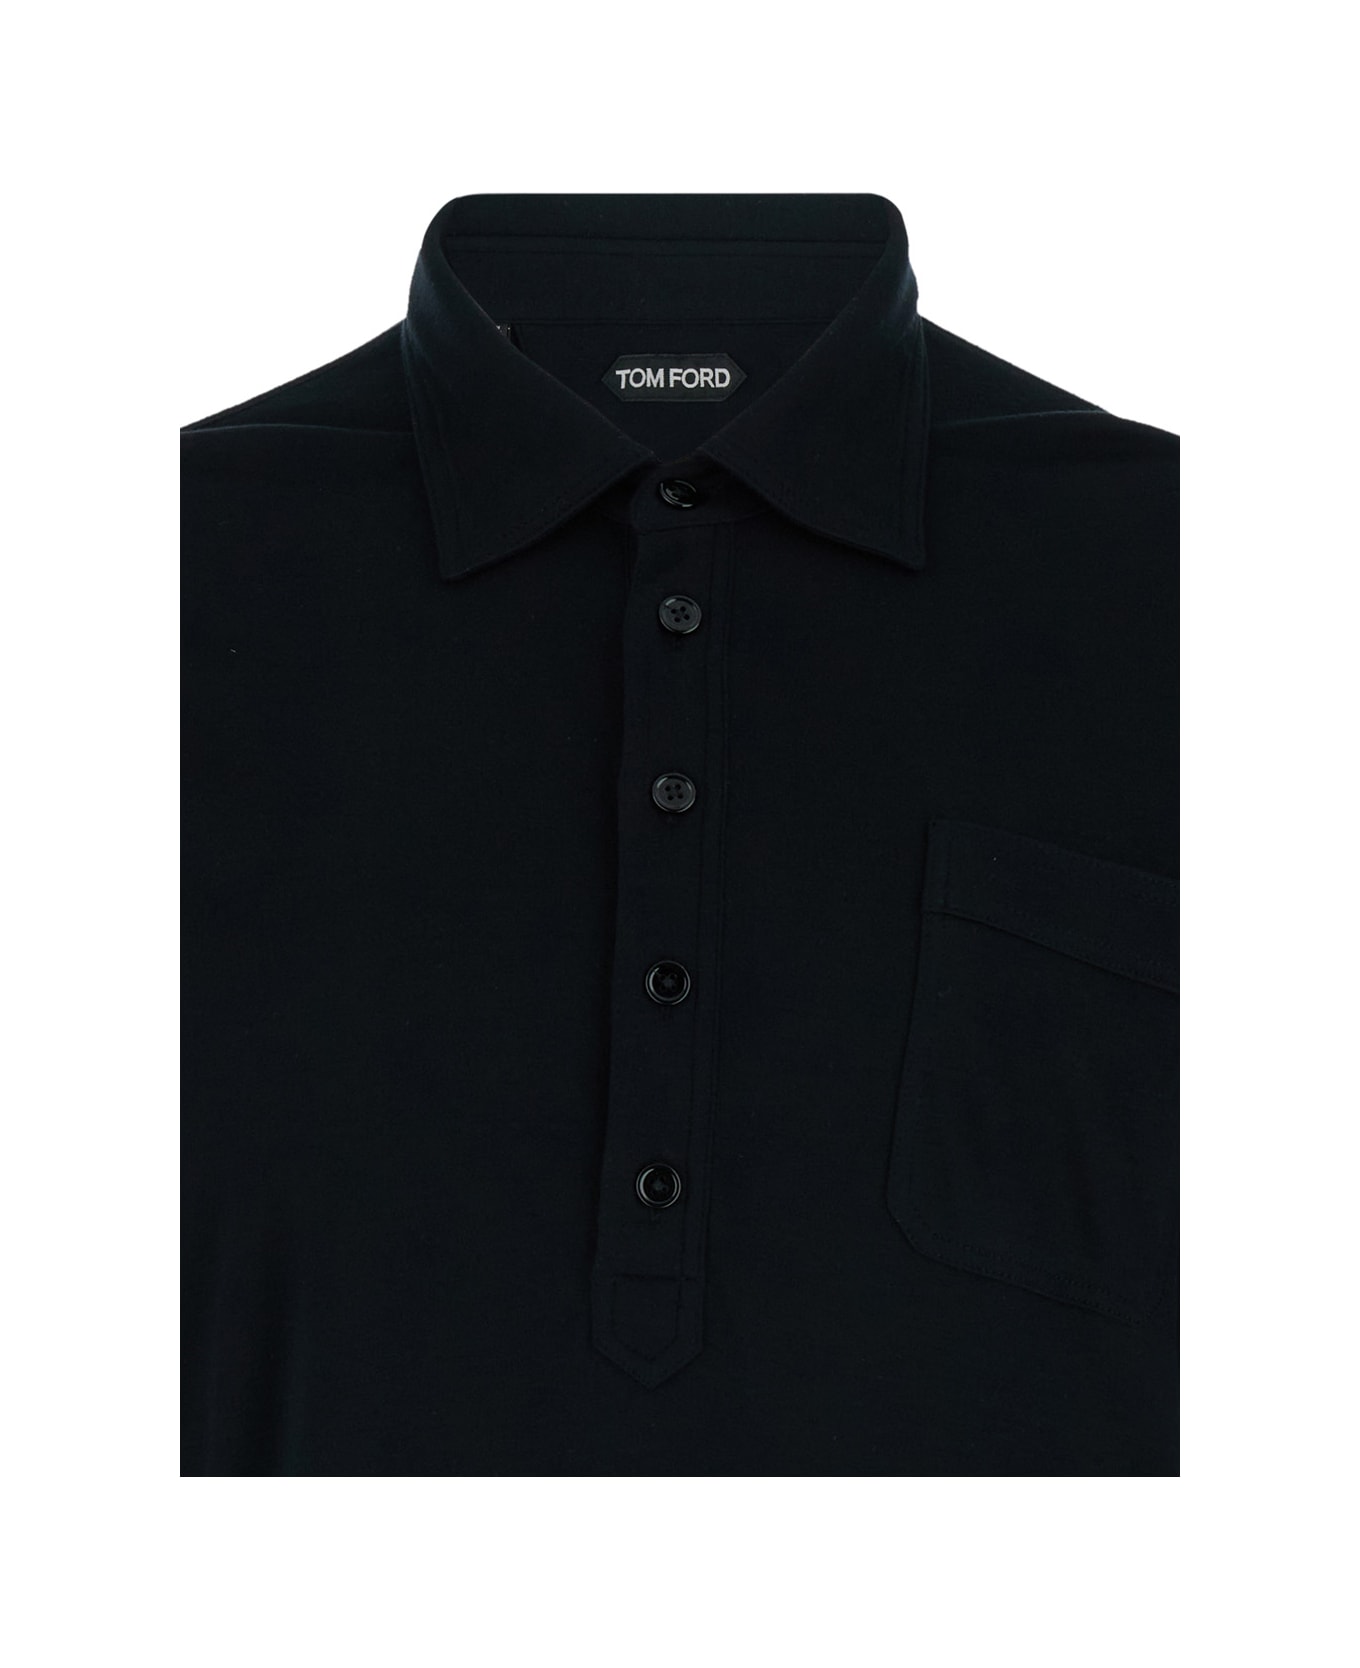 Tom Ford Black Polo Shirt In Cotton Blend Man - Black